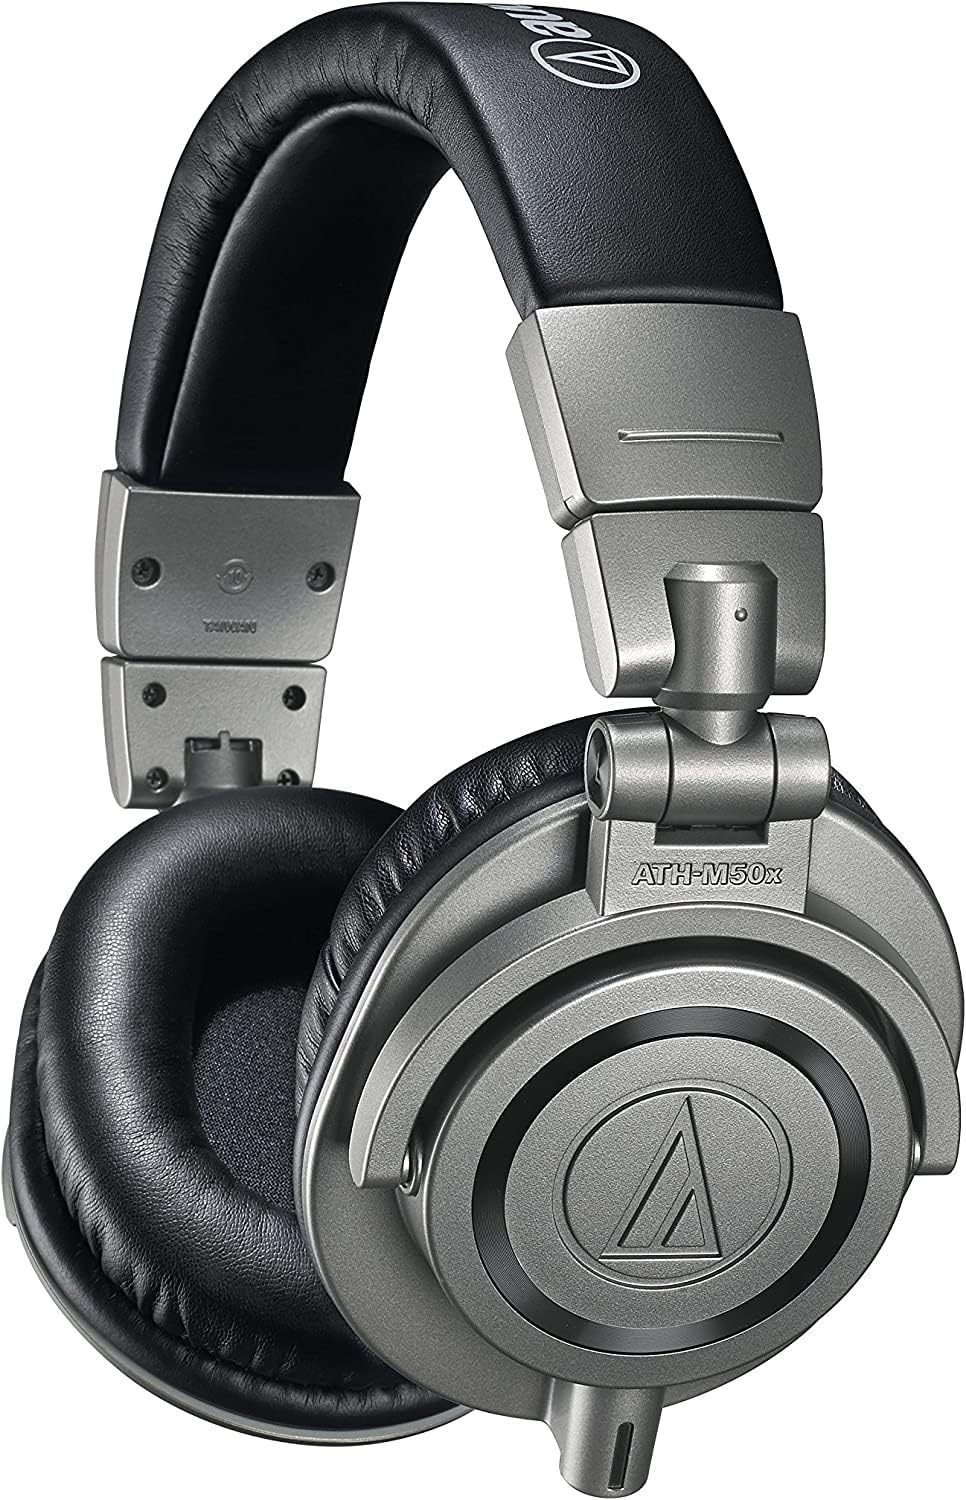 audio-technica ATH-M50xGM Professional Monitor Headphones, Gun Metal